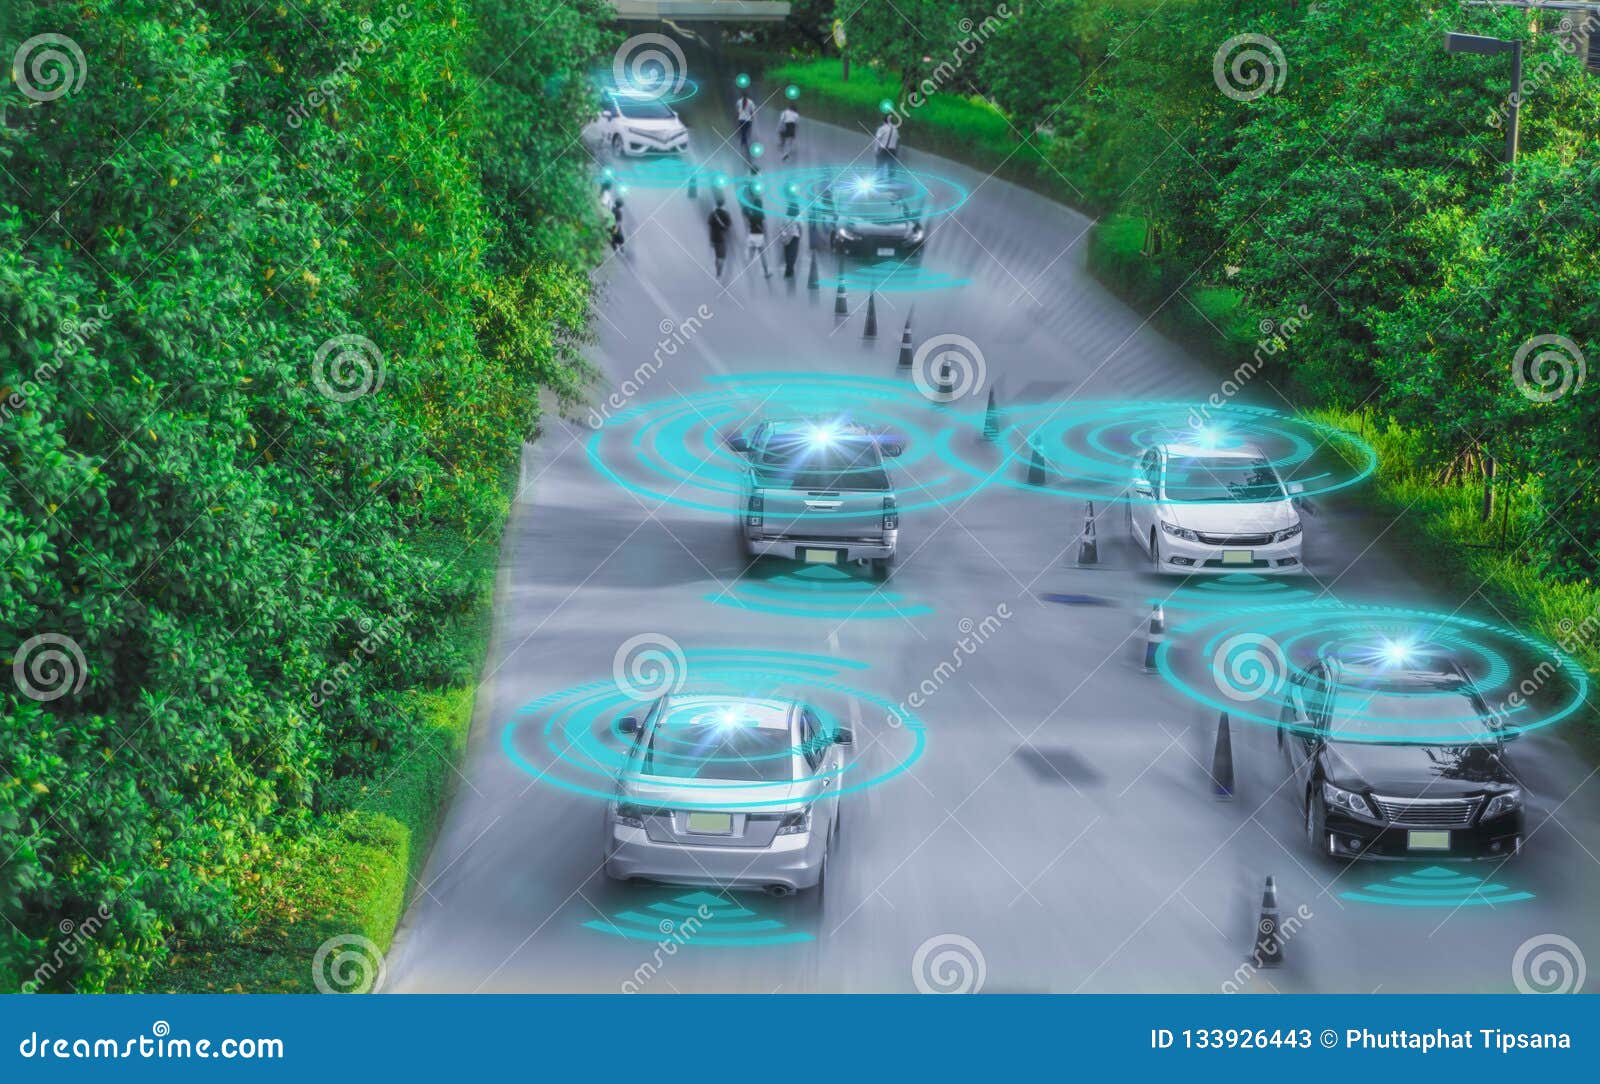 intelligent car, autonomous self driving vehicle with artificial